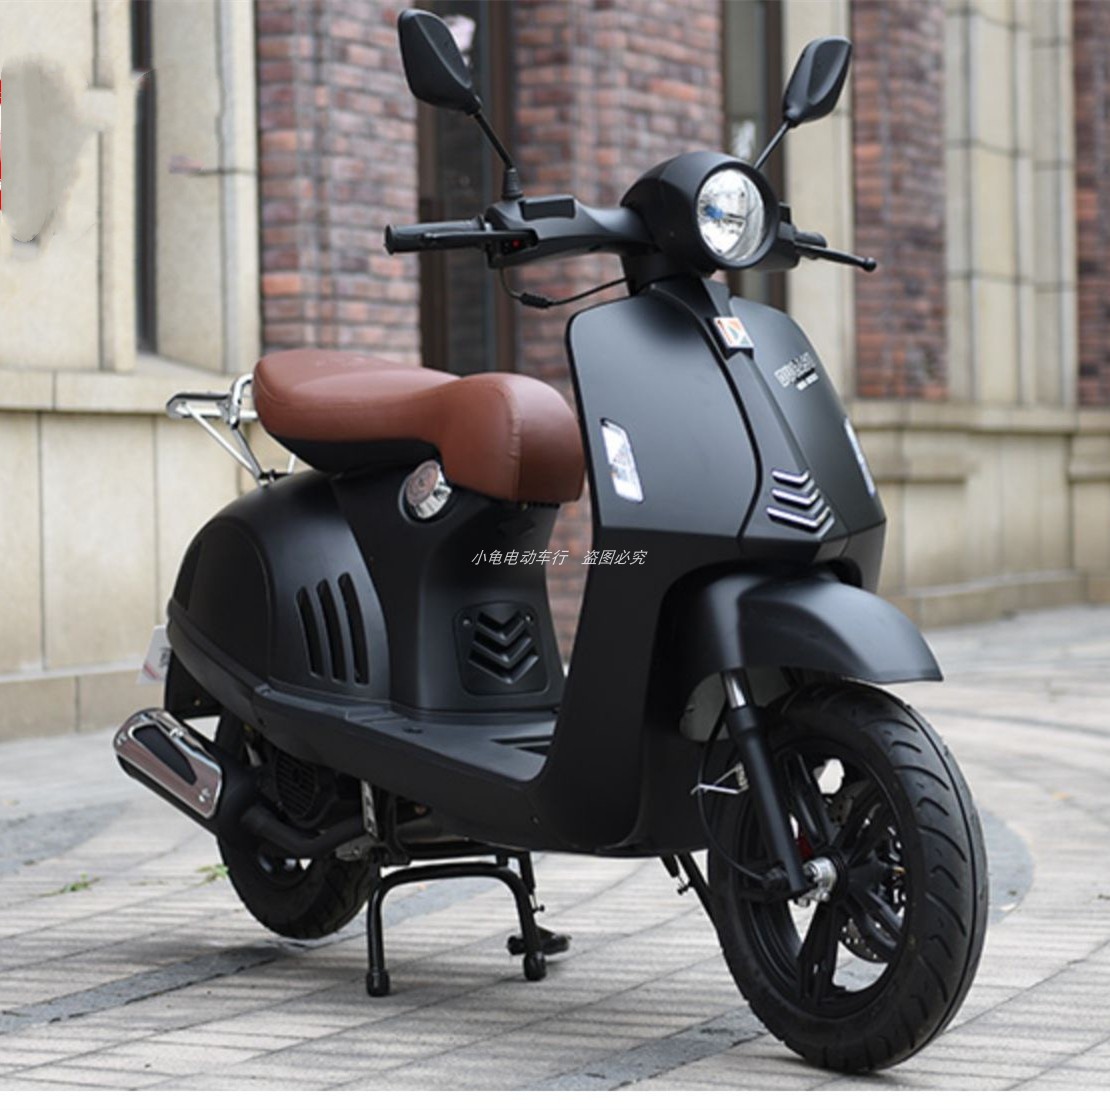 Vespa罗马假日摩托车踏板车塑料外壳国四125cc电喷比亚乔原厂配件